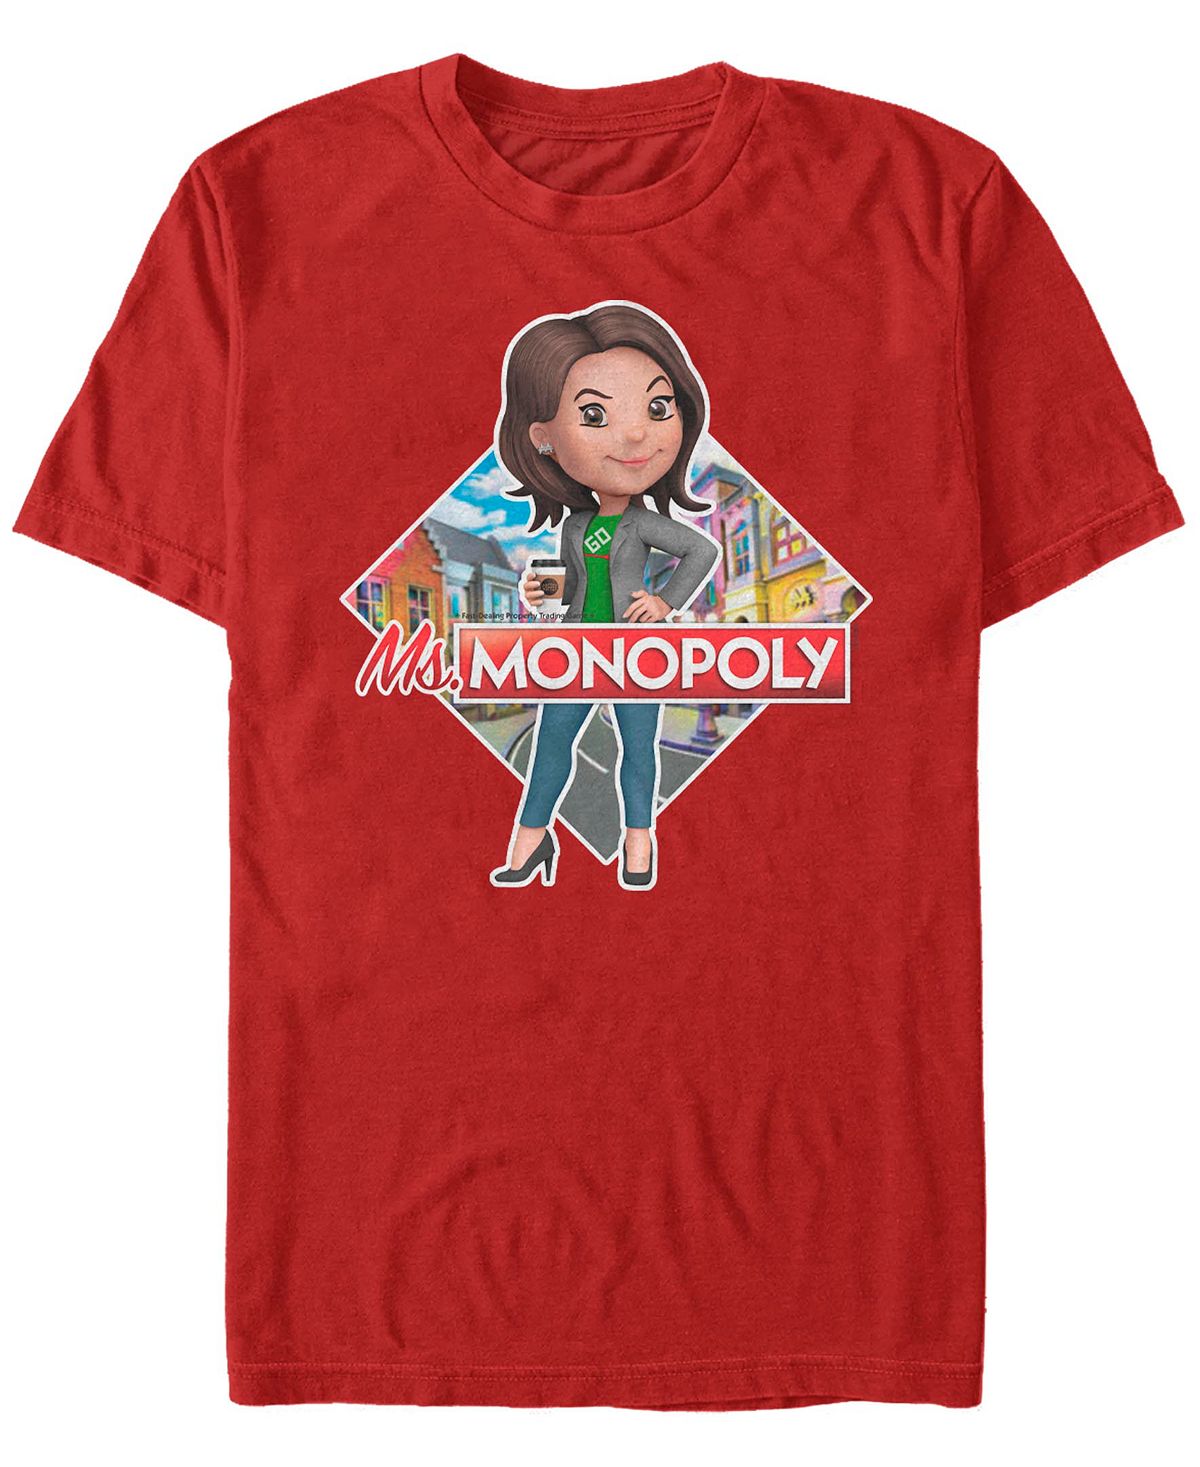 цена Мужская футболка с коротким рукавом с логотипом monopoly ms monopoly Fifth Sun, красный